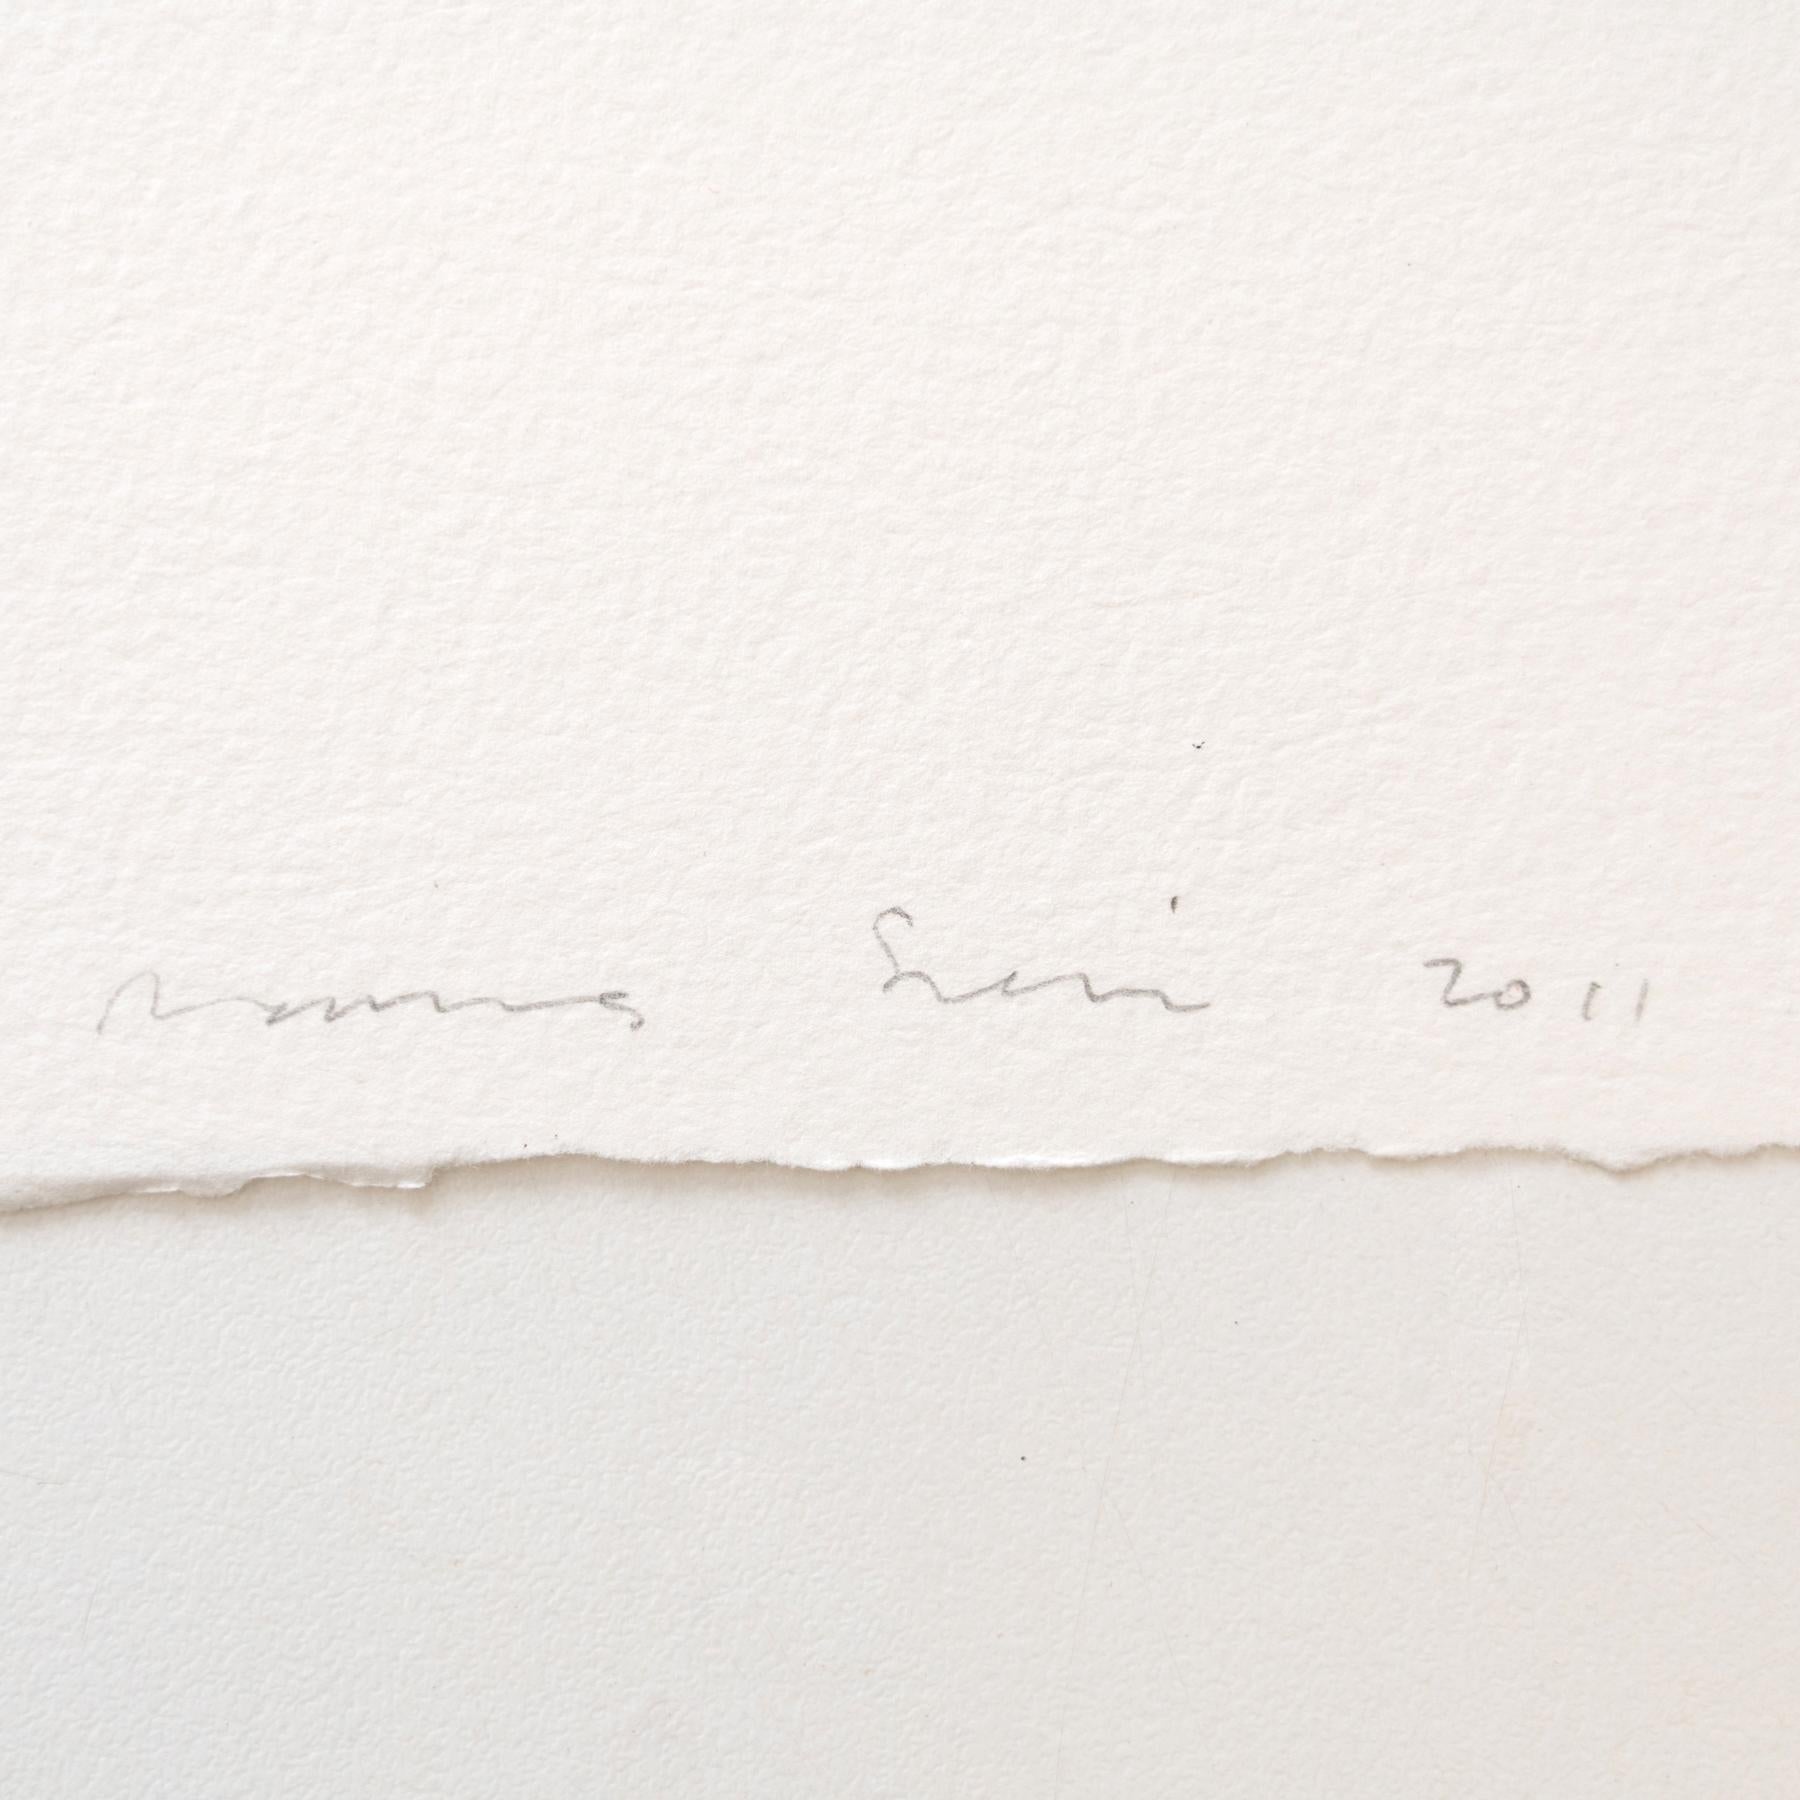 Contemporary James Siena Etching 'Membre', 2011 For Sale